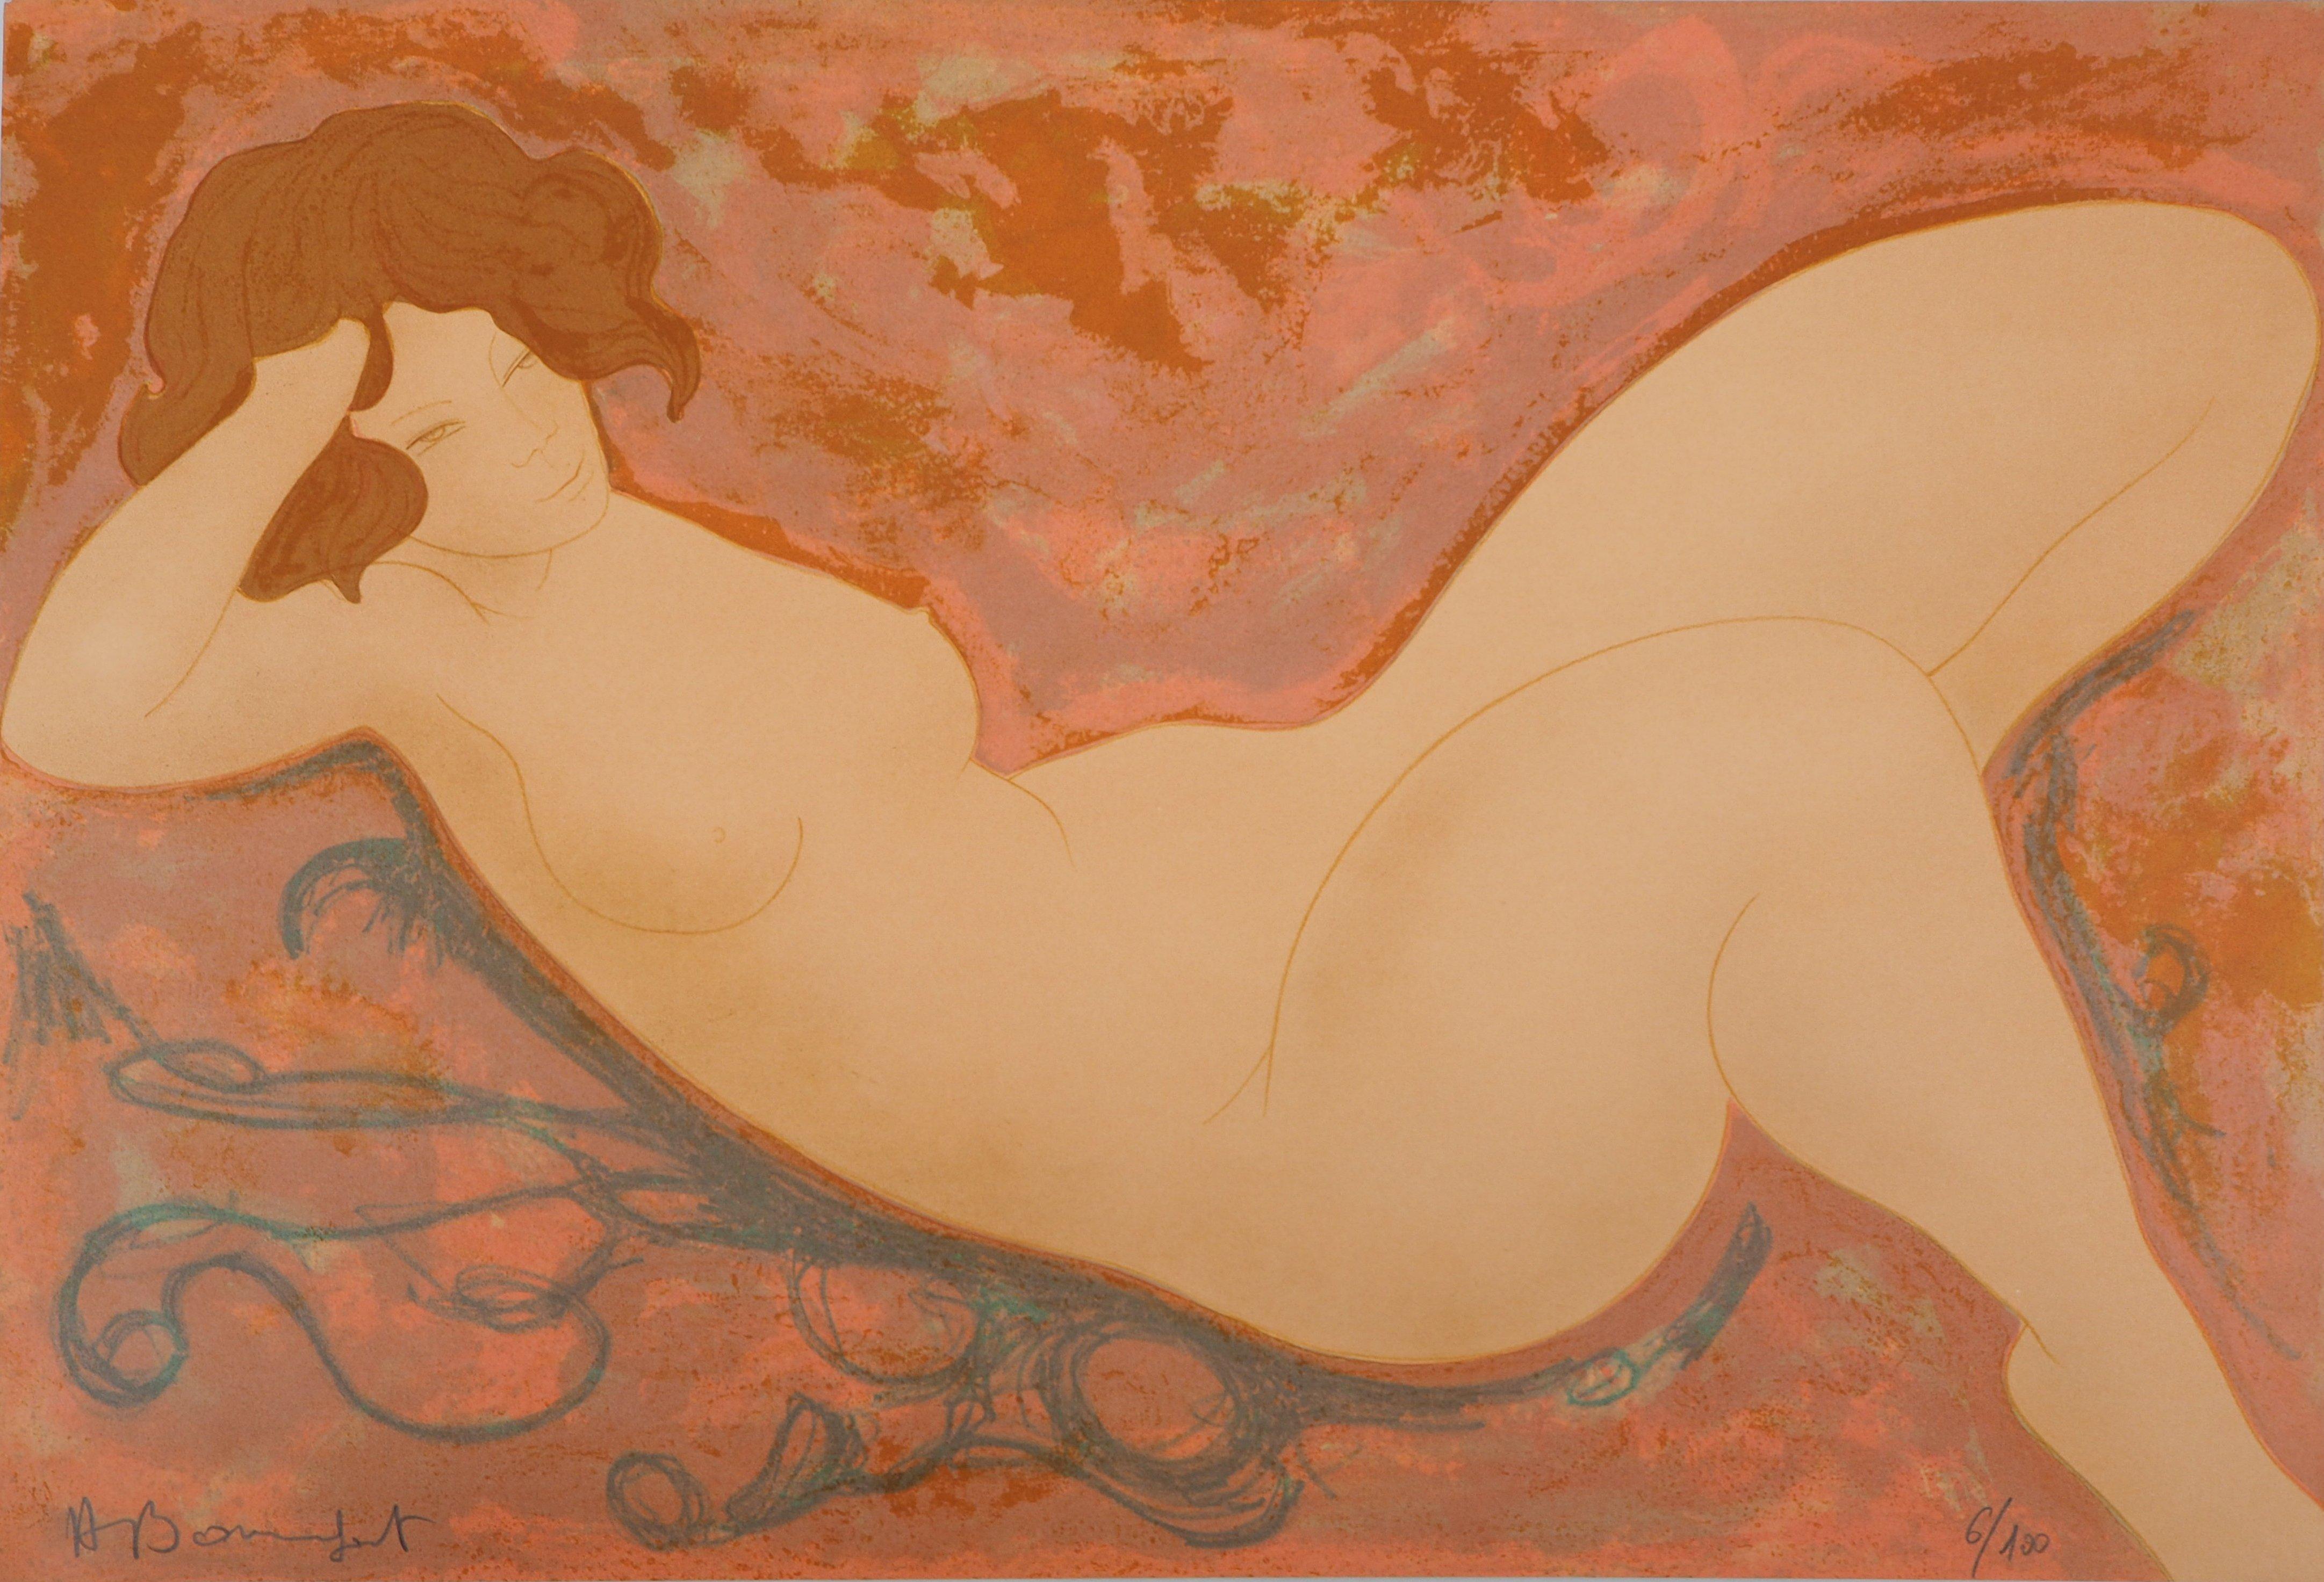 Alain Bonnefoit Nude Print - Asleep Nude - Original lithograph, Handsigned and Numbered /100